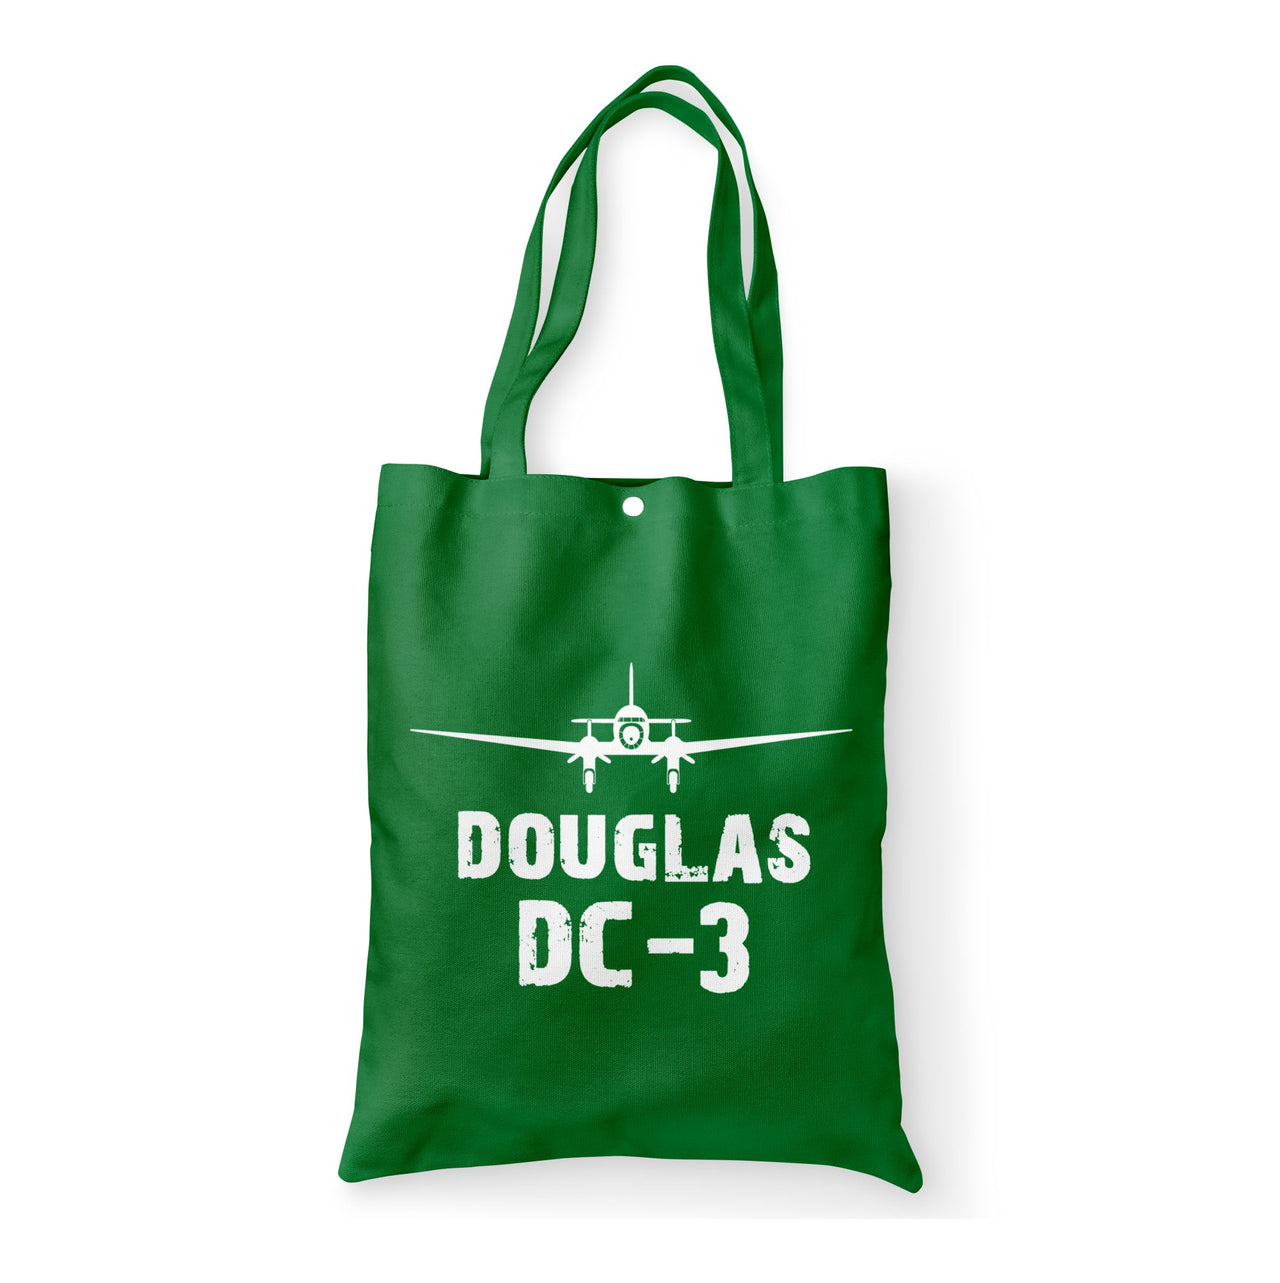 Douglas DC-3 & Plane Designed Tote Bags